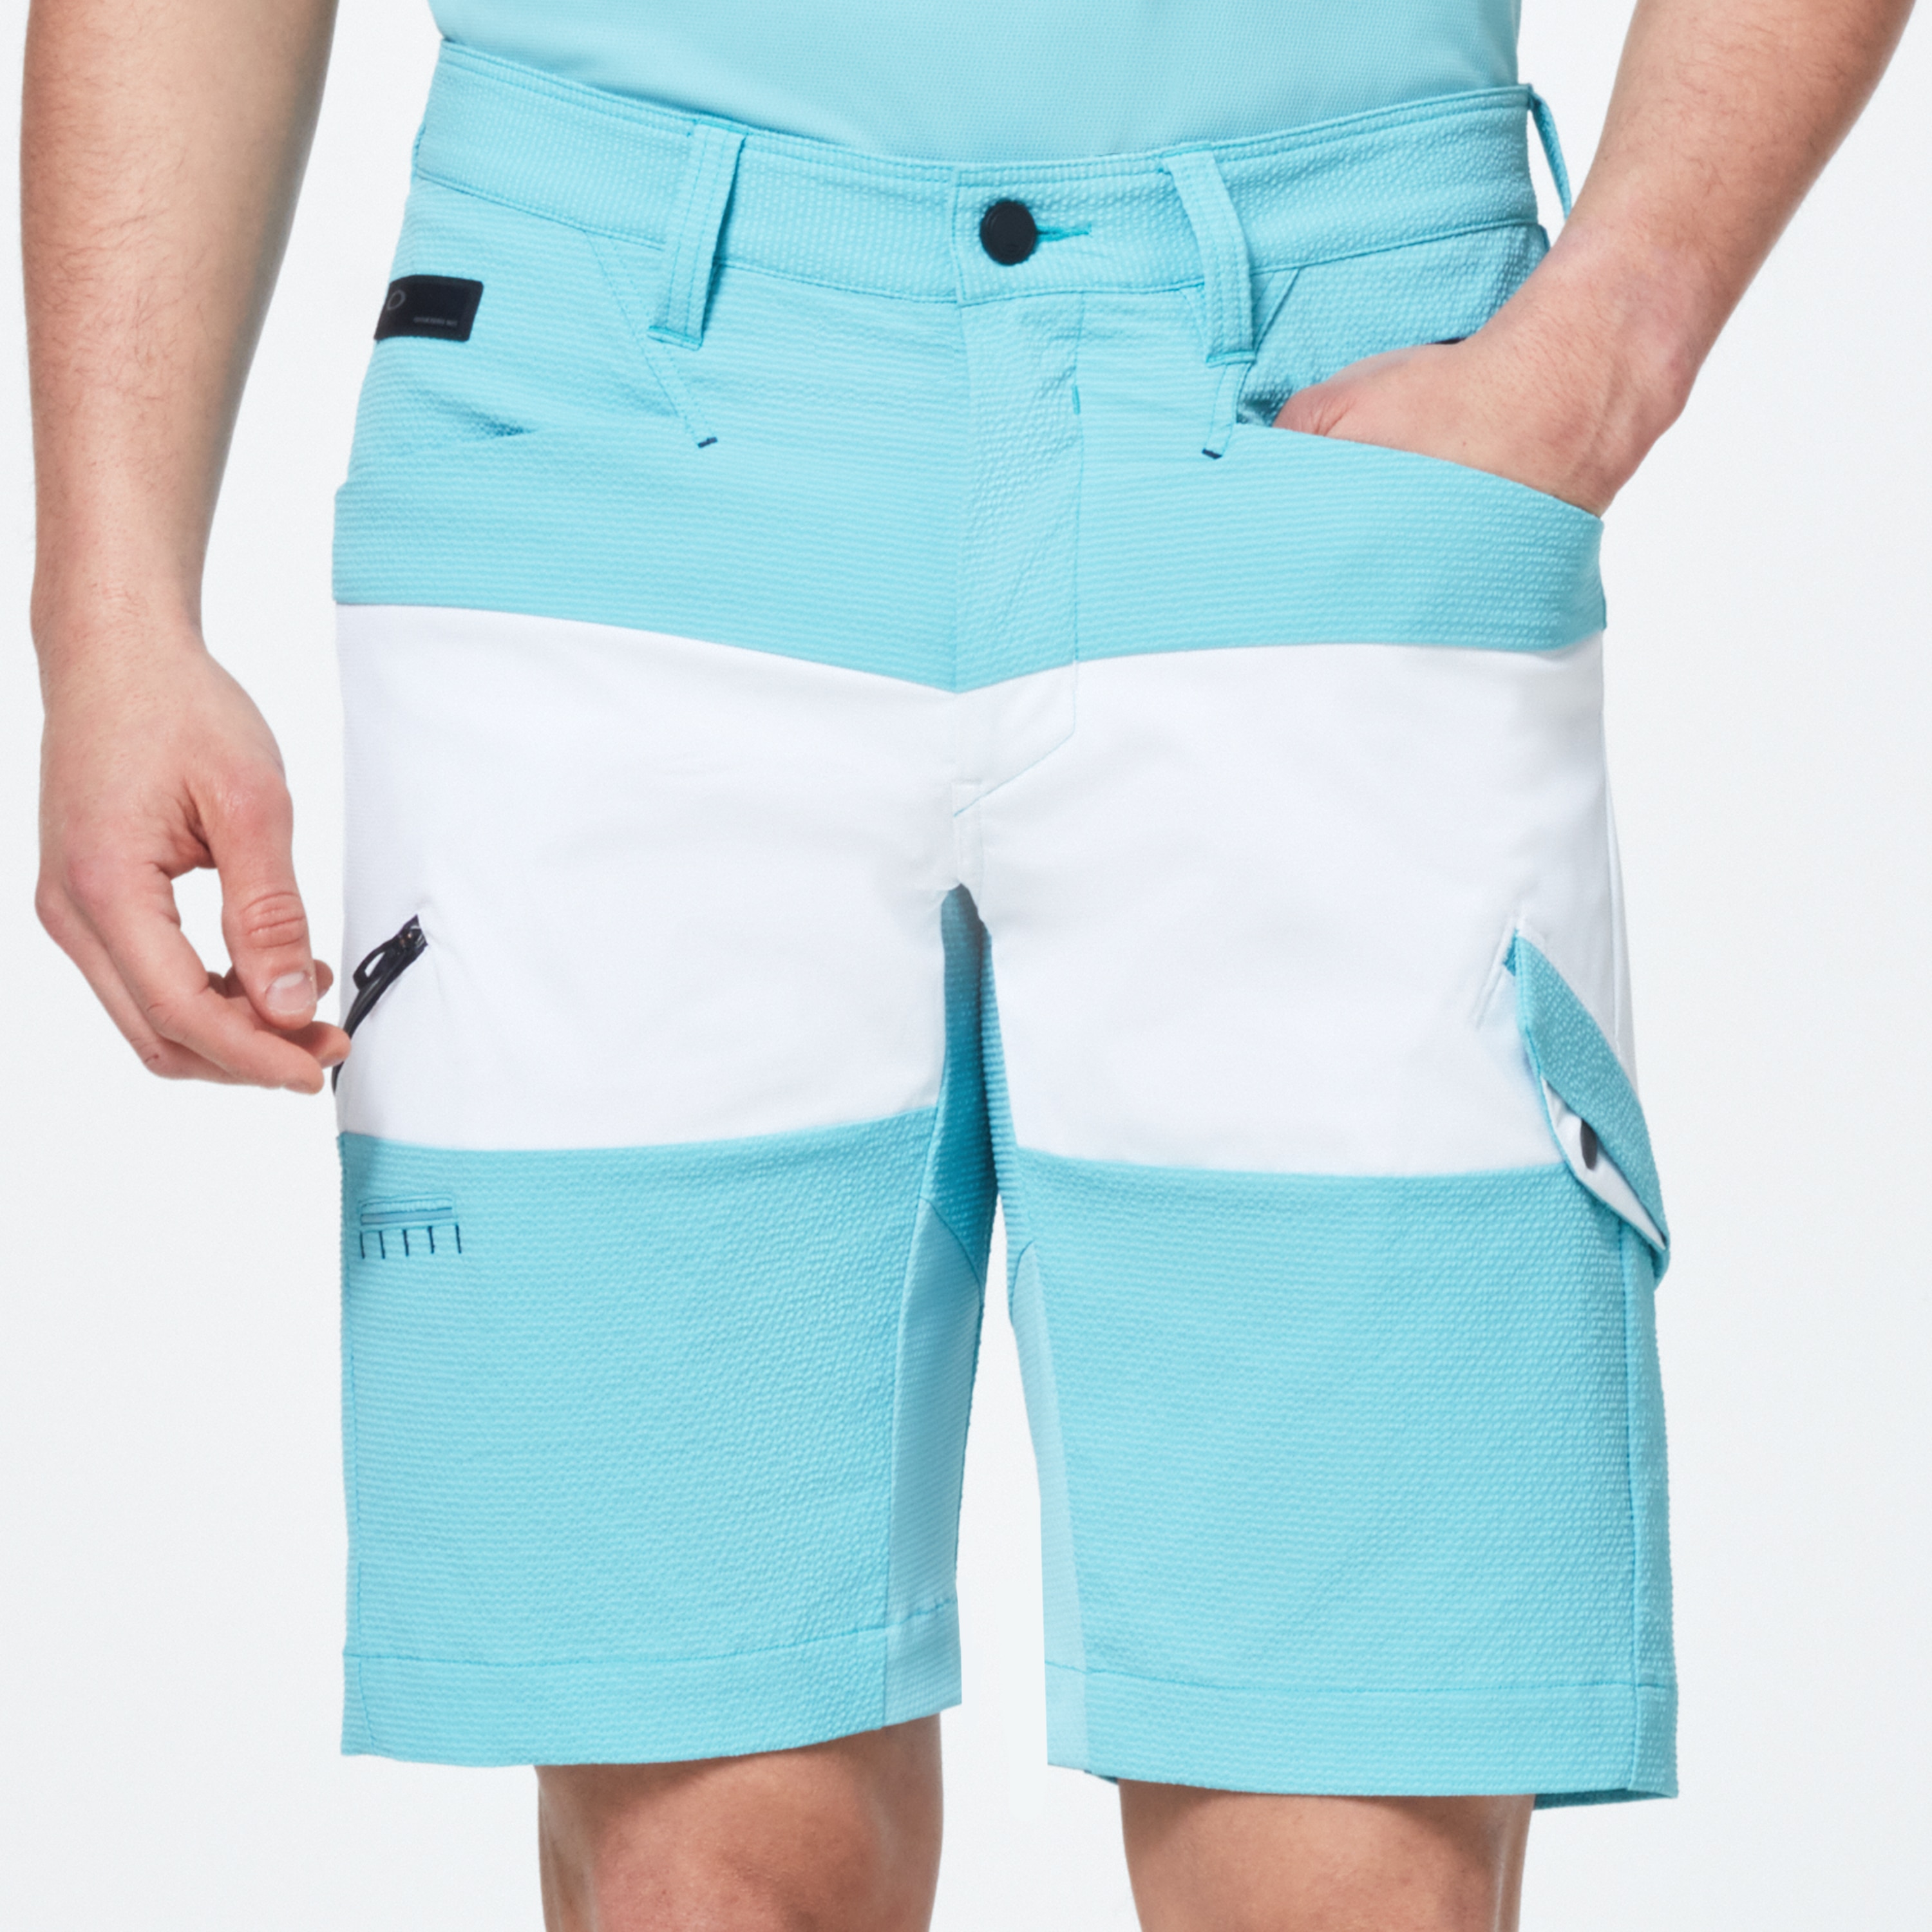 oakley cargo shorts